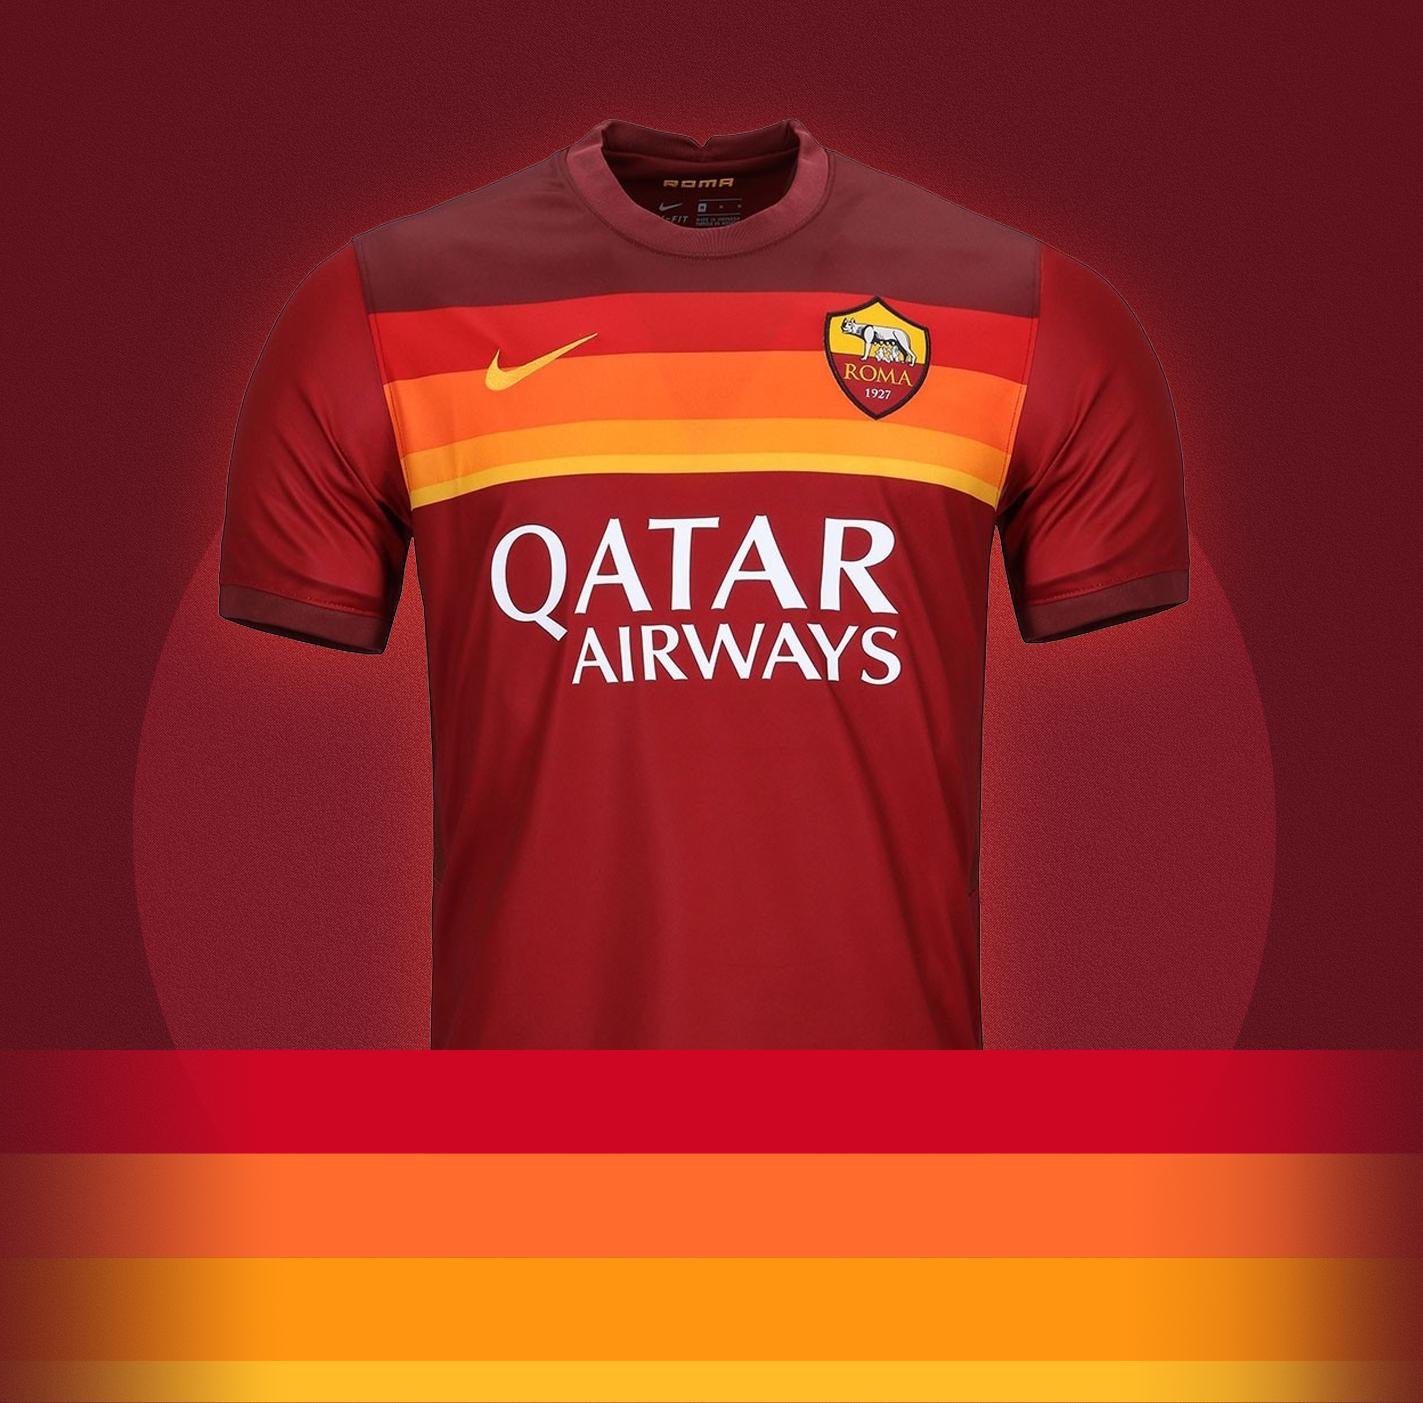 new roma jersey